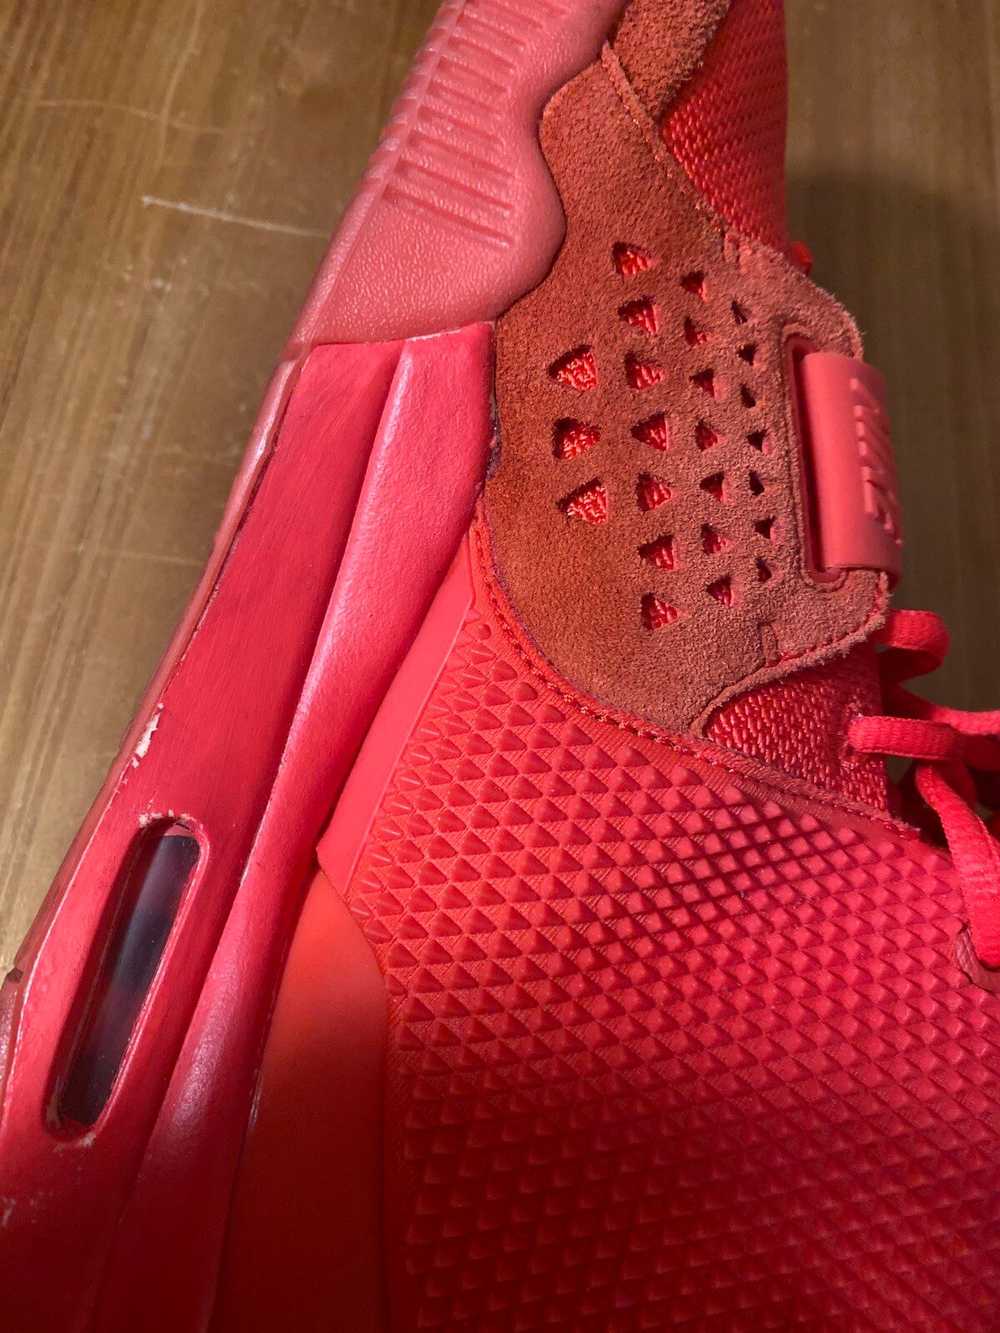 Kanye West × Nike Nike Air Yeezy 2 “Red October” - image 10